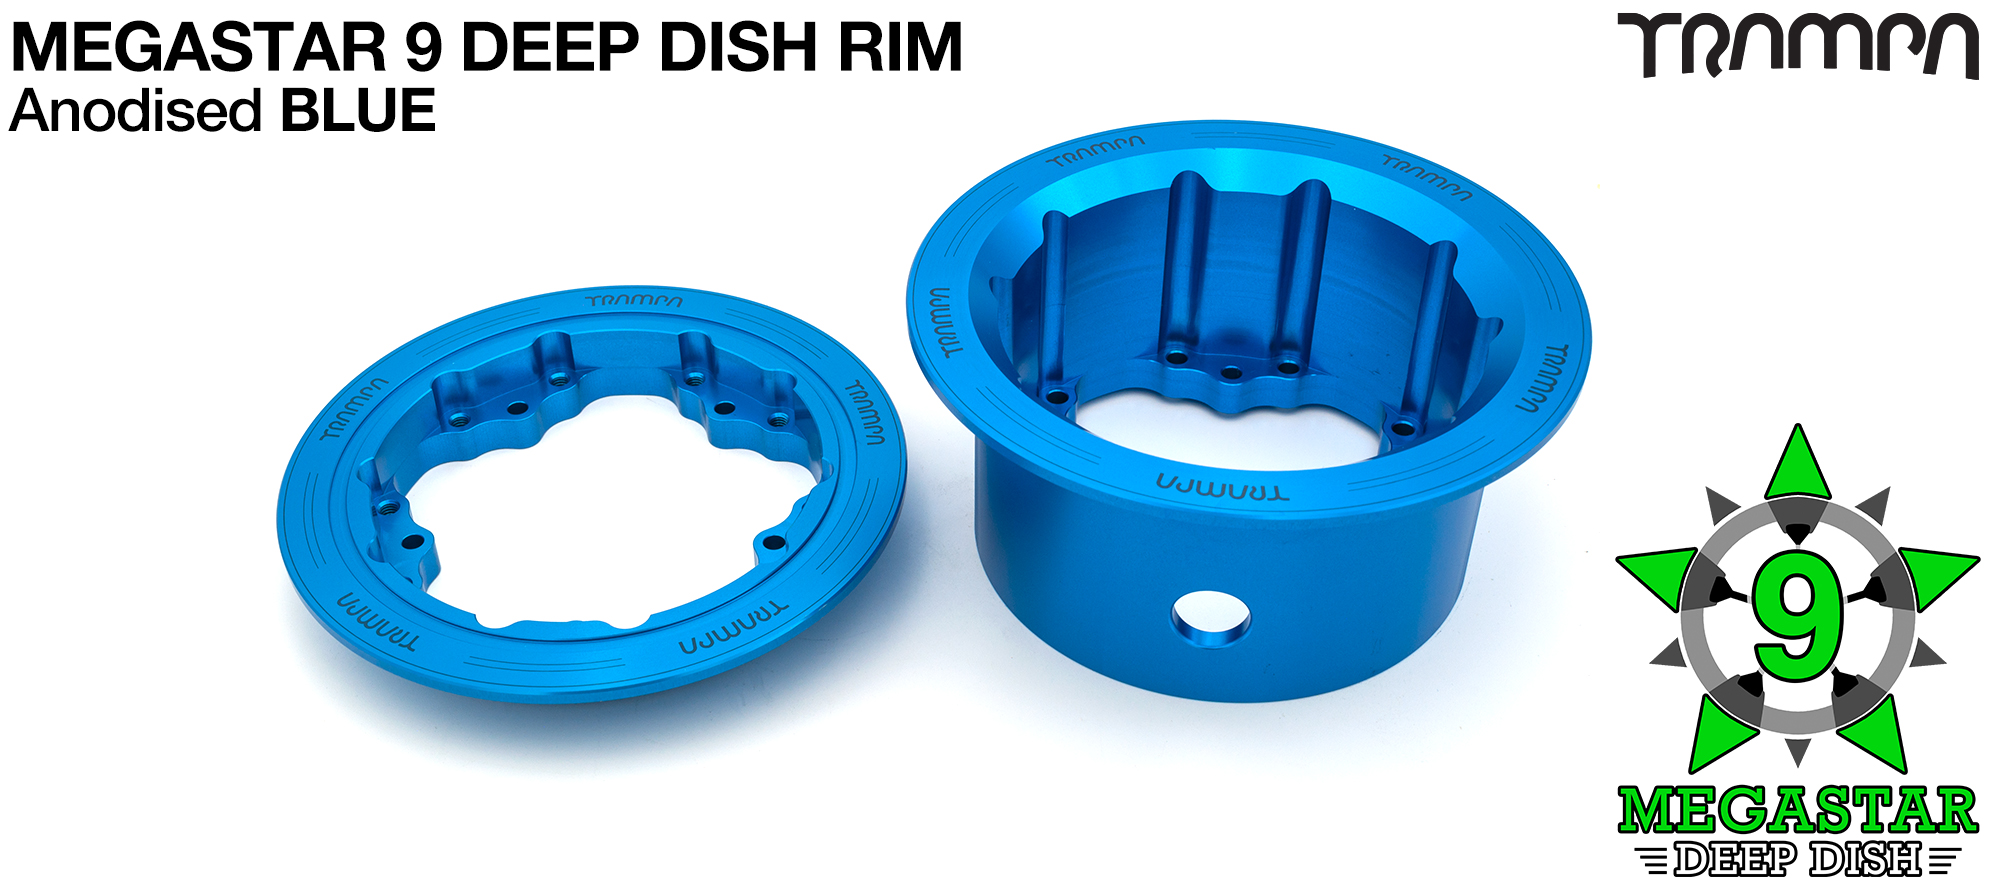 DEEP-DISH MEGASTAR 9 Rims on the REAR - BLUE